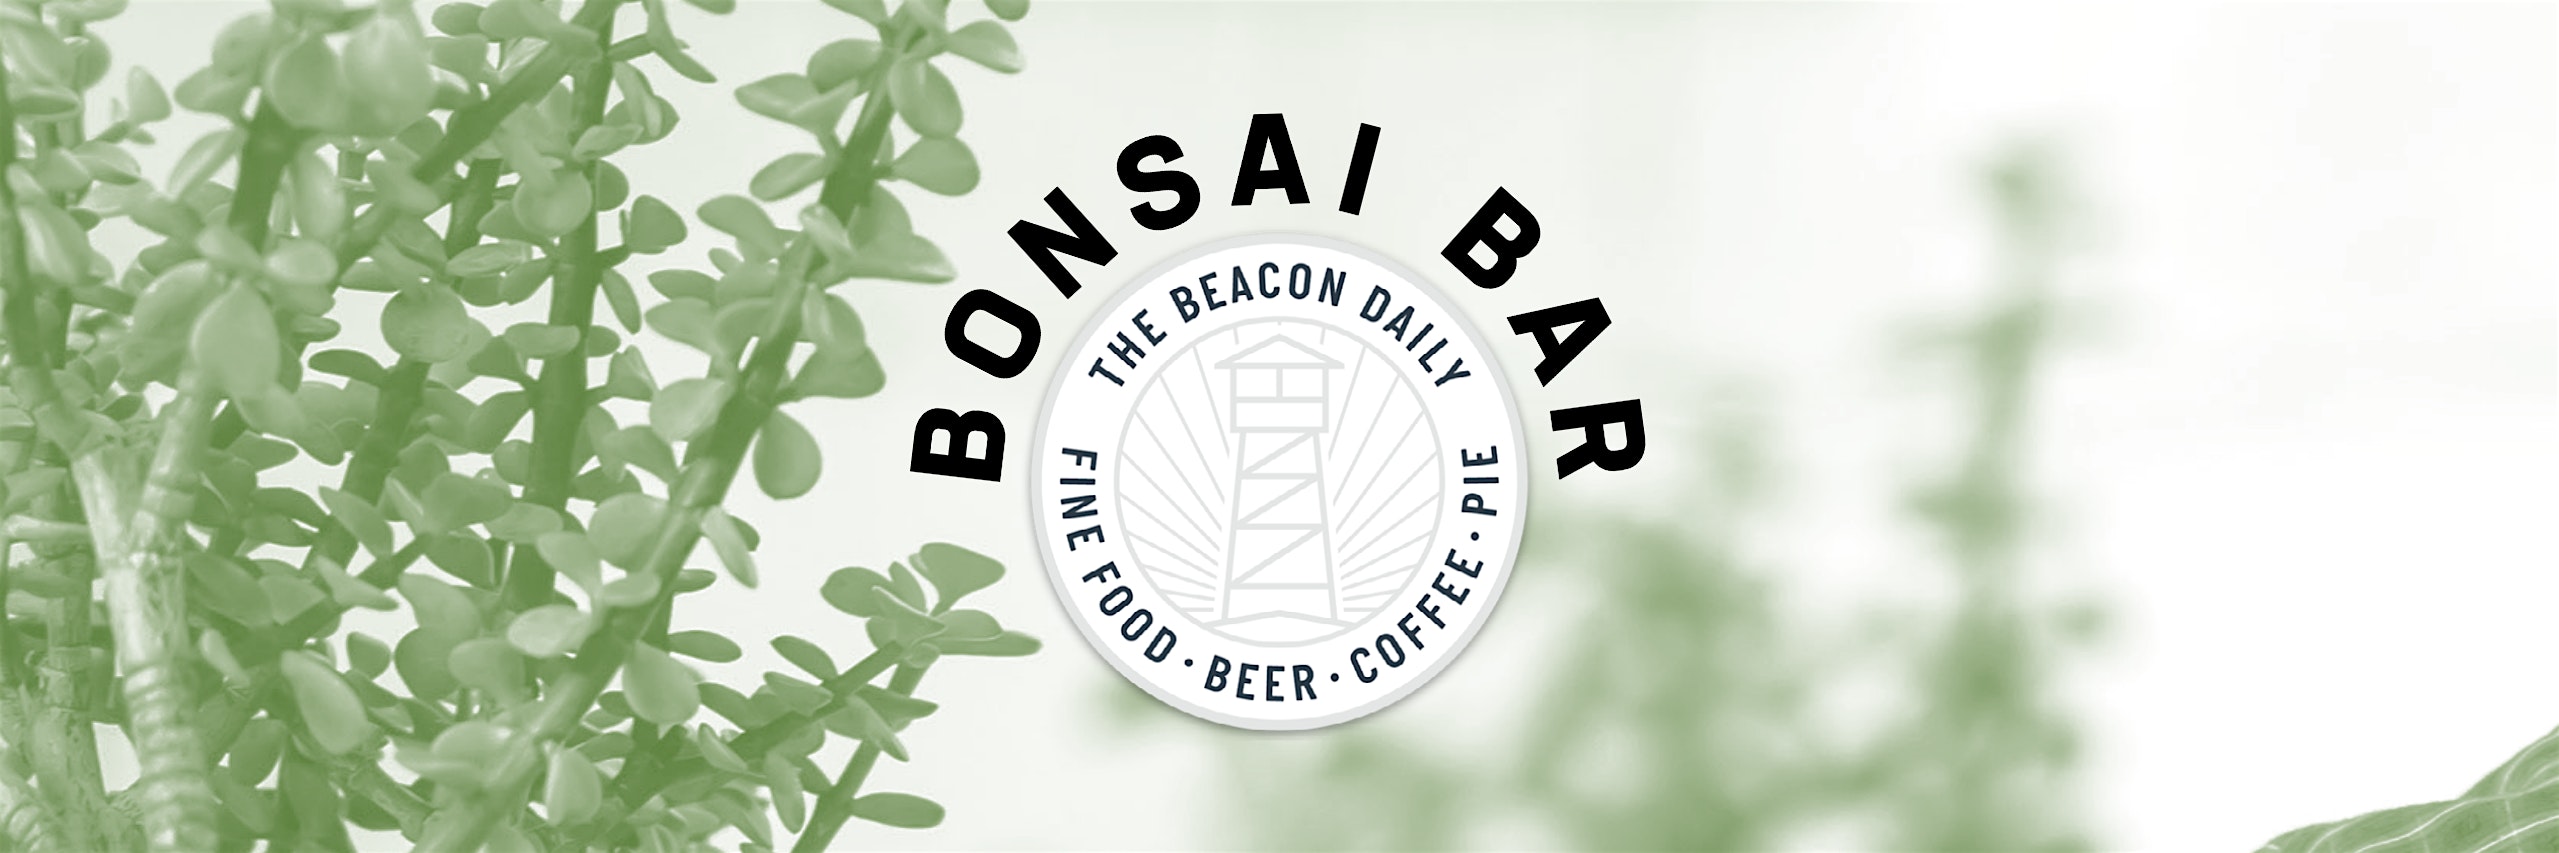 Bonsai Bar @ The Beacon Daily